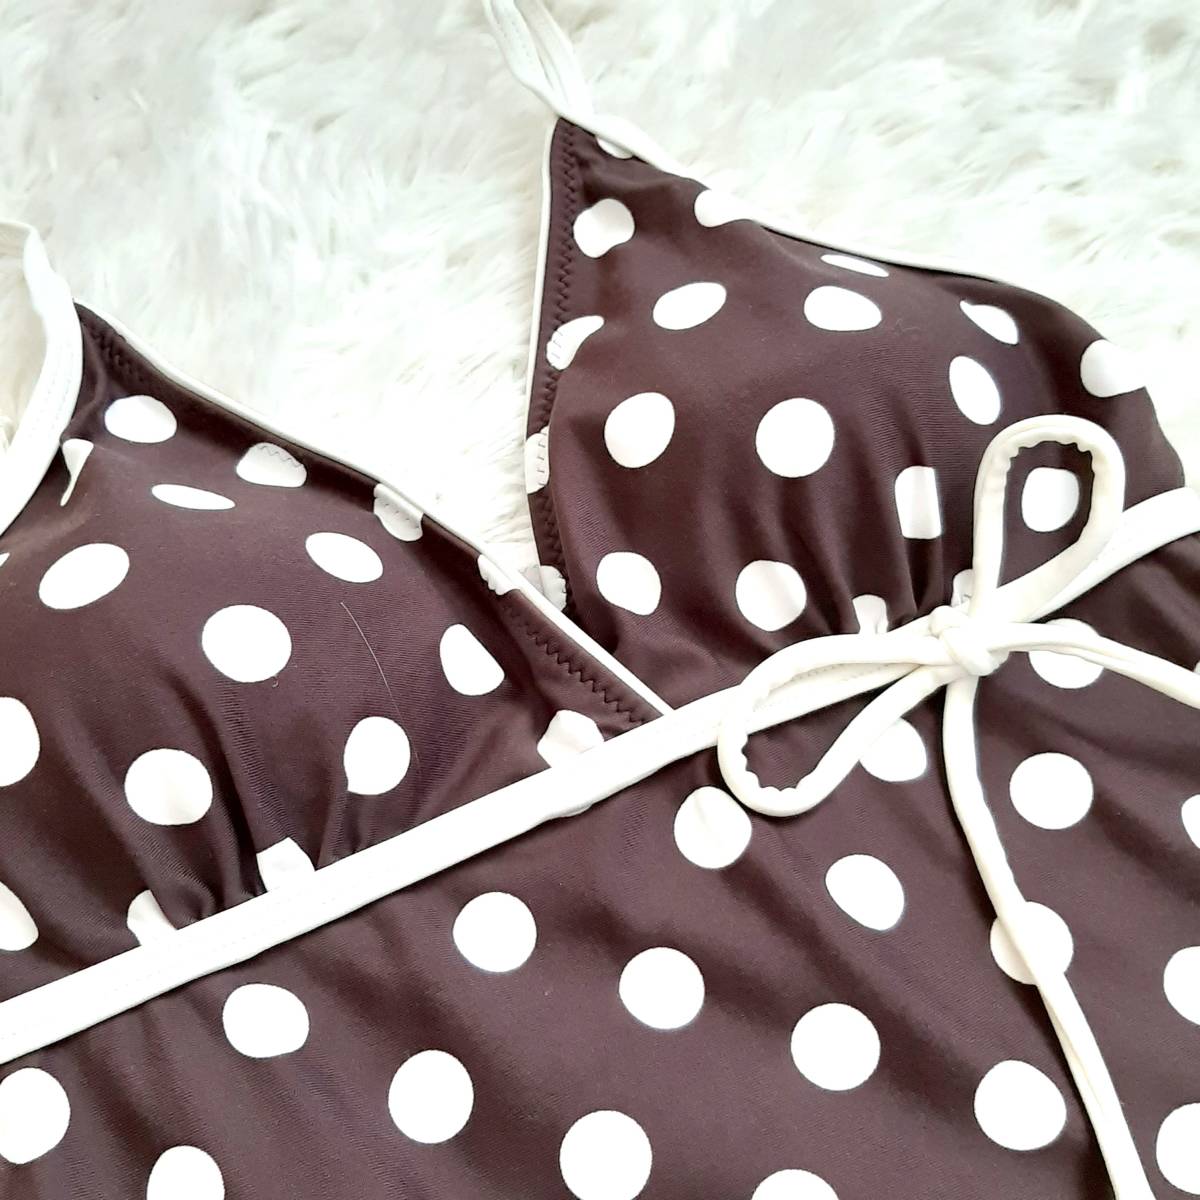  anonymity delivery * dot pattern tankini bikini swimsuit white Brown 9M P